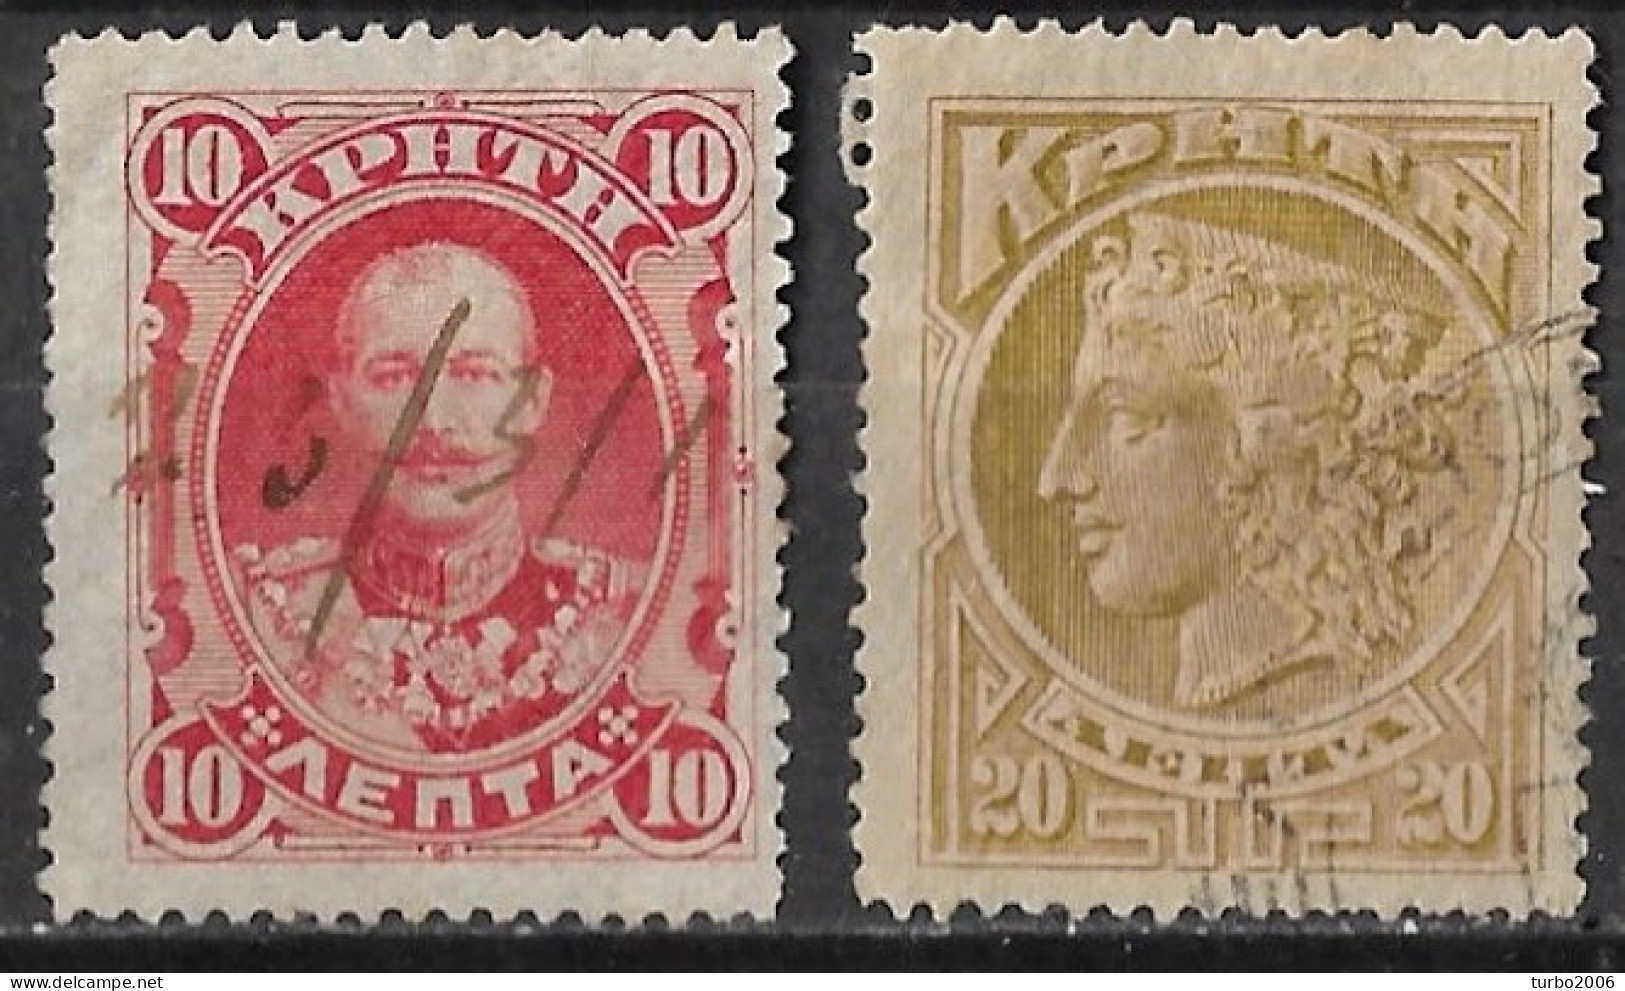 CRETE Fiscally Used 1900 1st Issue Of The Cretan State 10 L. Red Vl. 3 + Fiscal 20 L Yellow Olive (Feenstra 36) - Creta